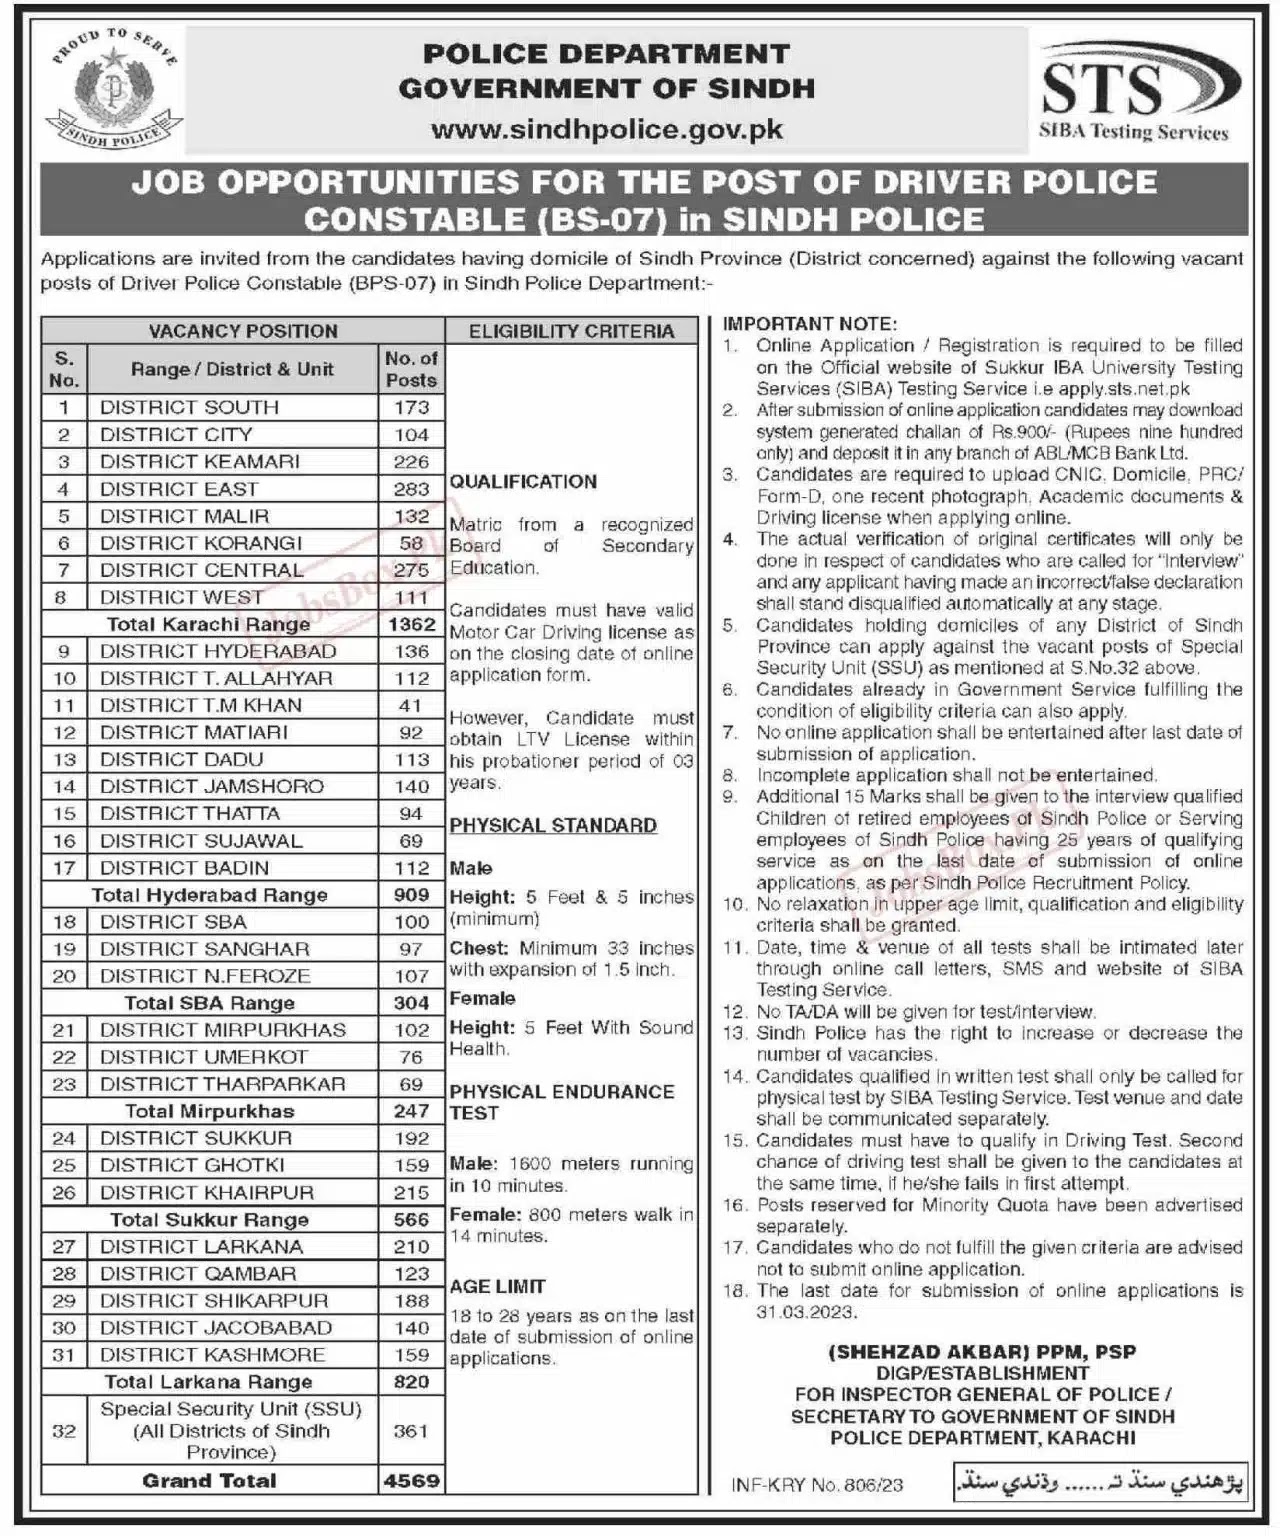 Sindh Police Department Jobs 2023 - Latest Advertisement